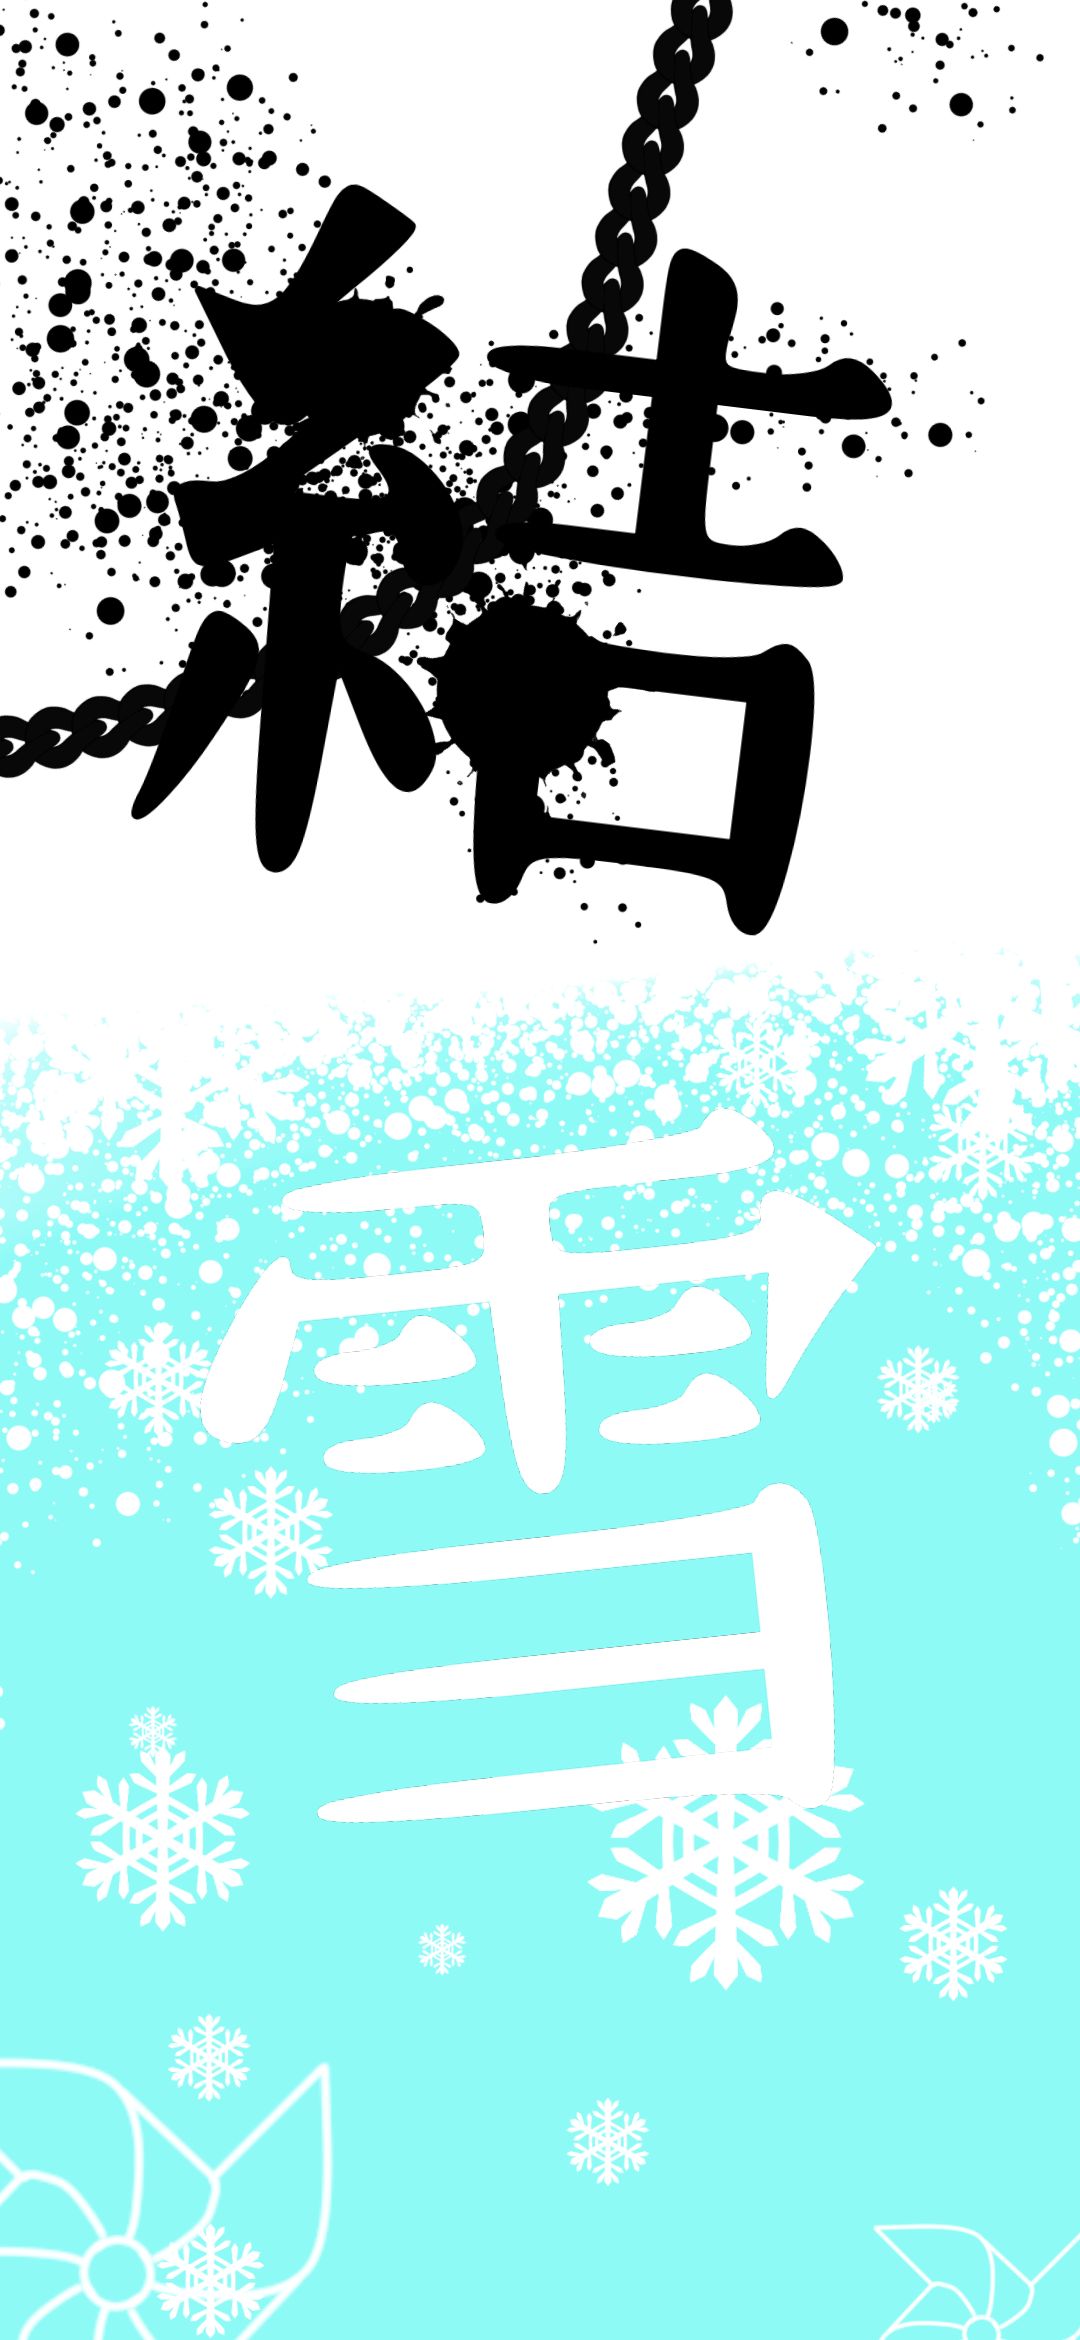 artistic, typography, kanji